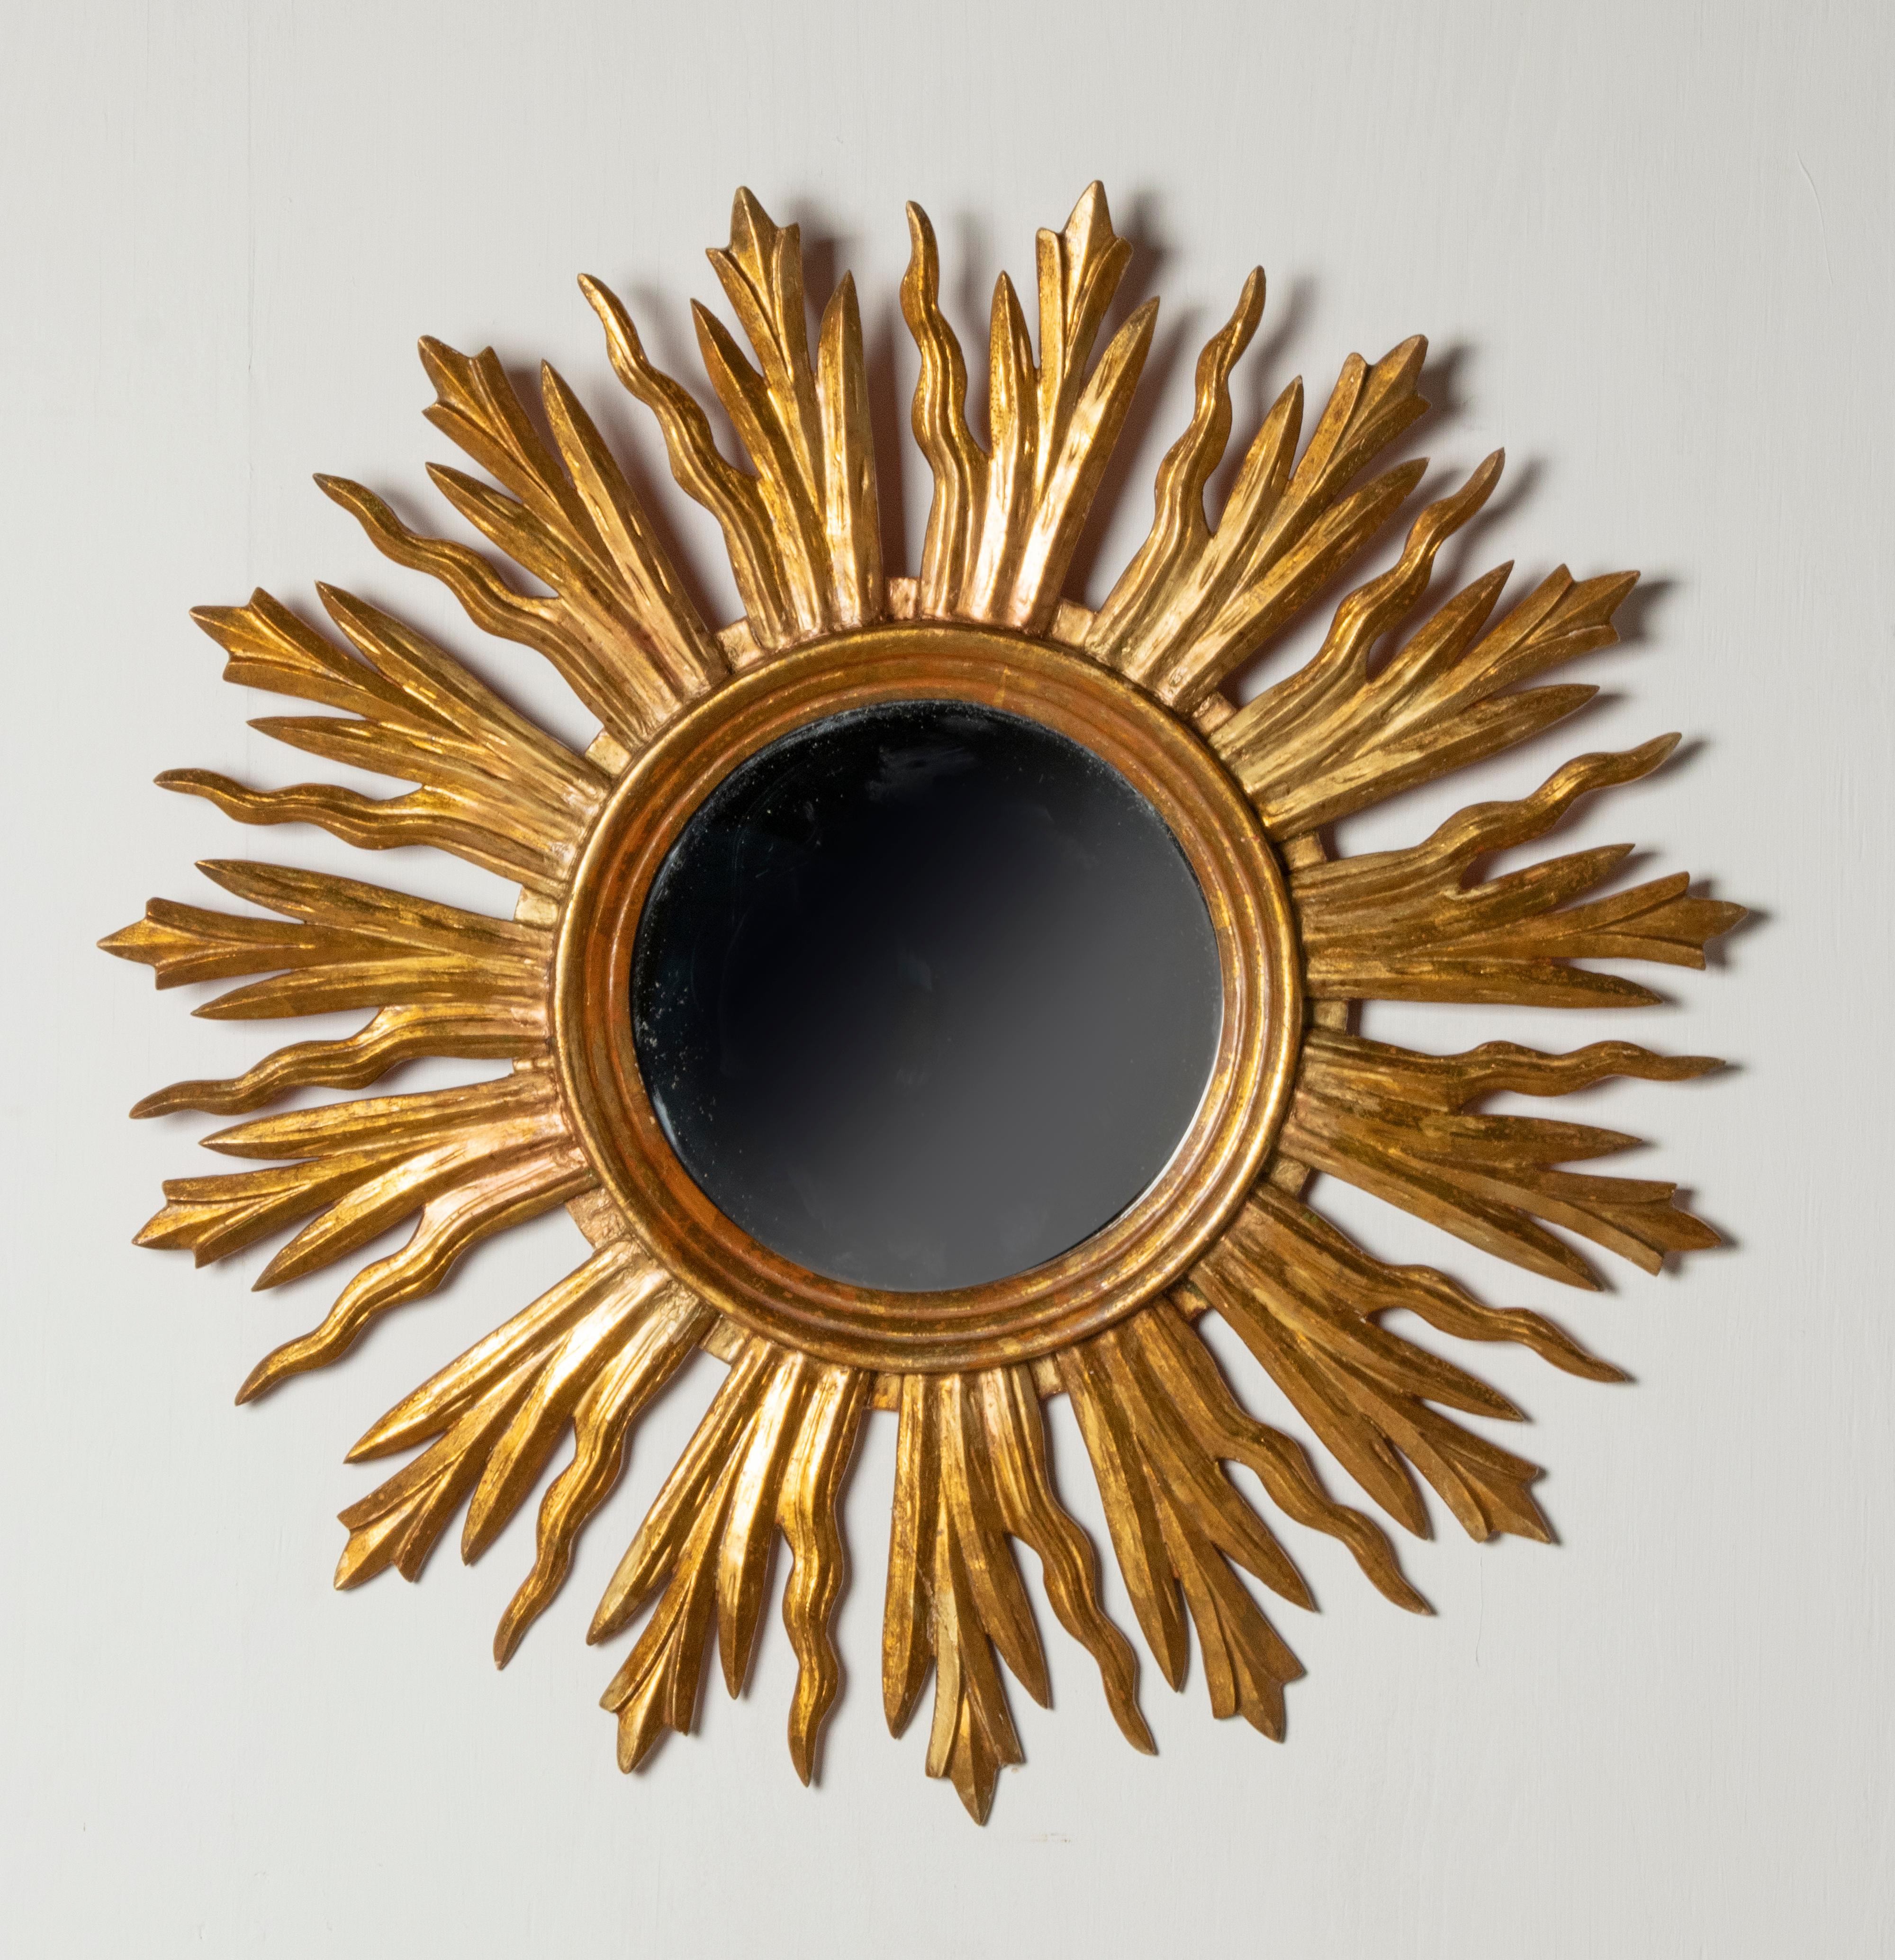 French Mid-Century Modern Wooden Carved Sunburst Wall Mirror